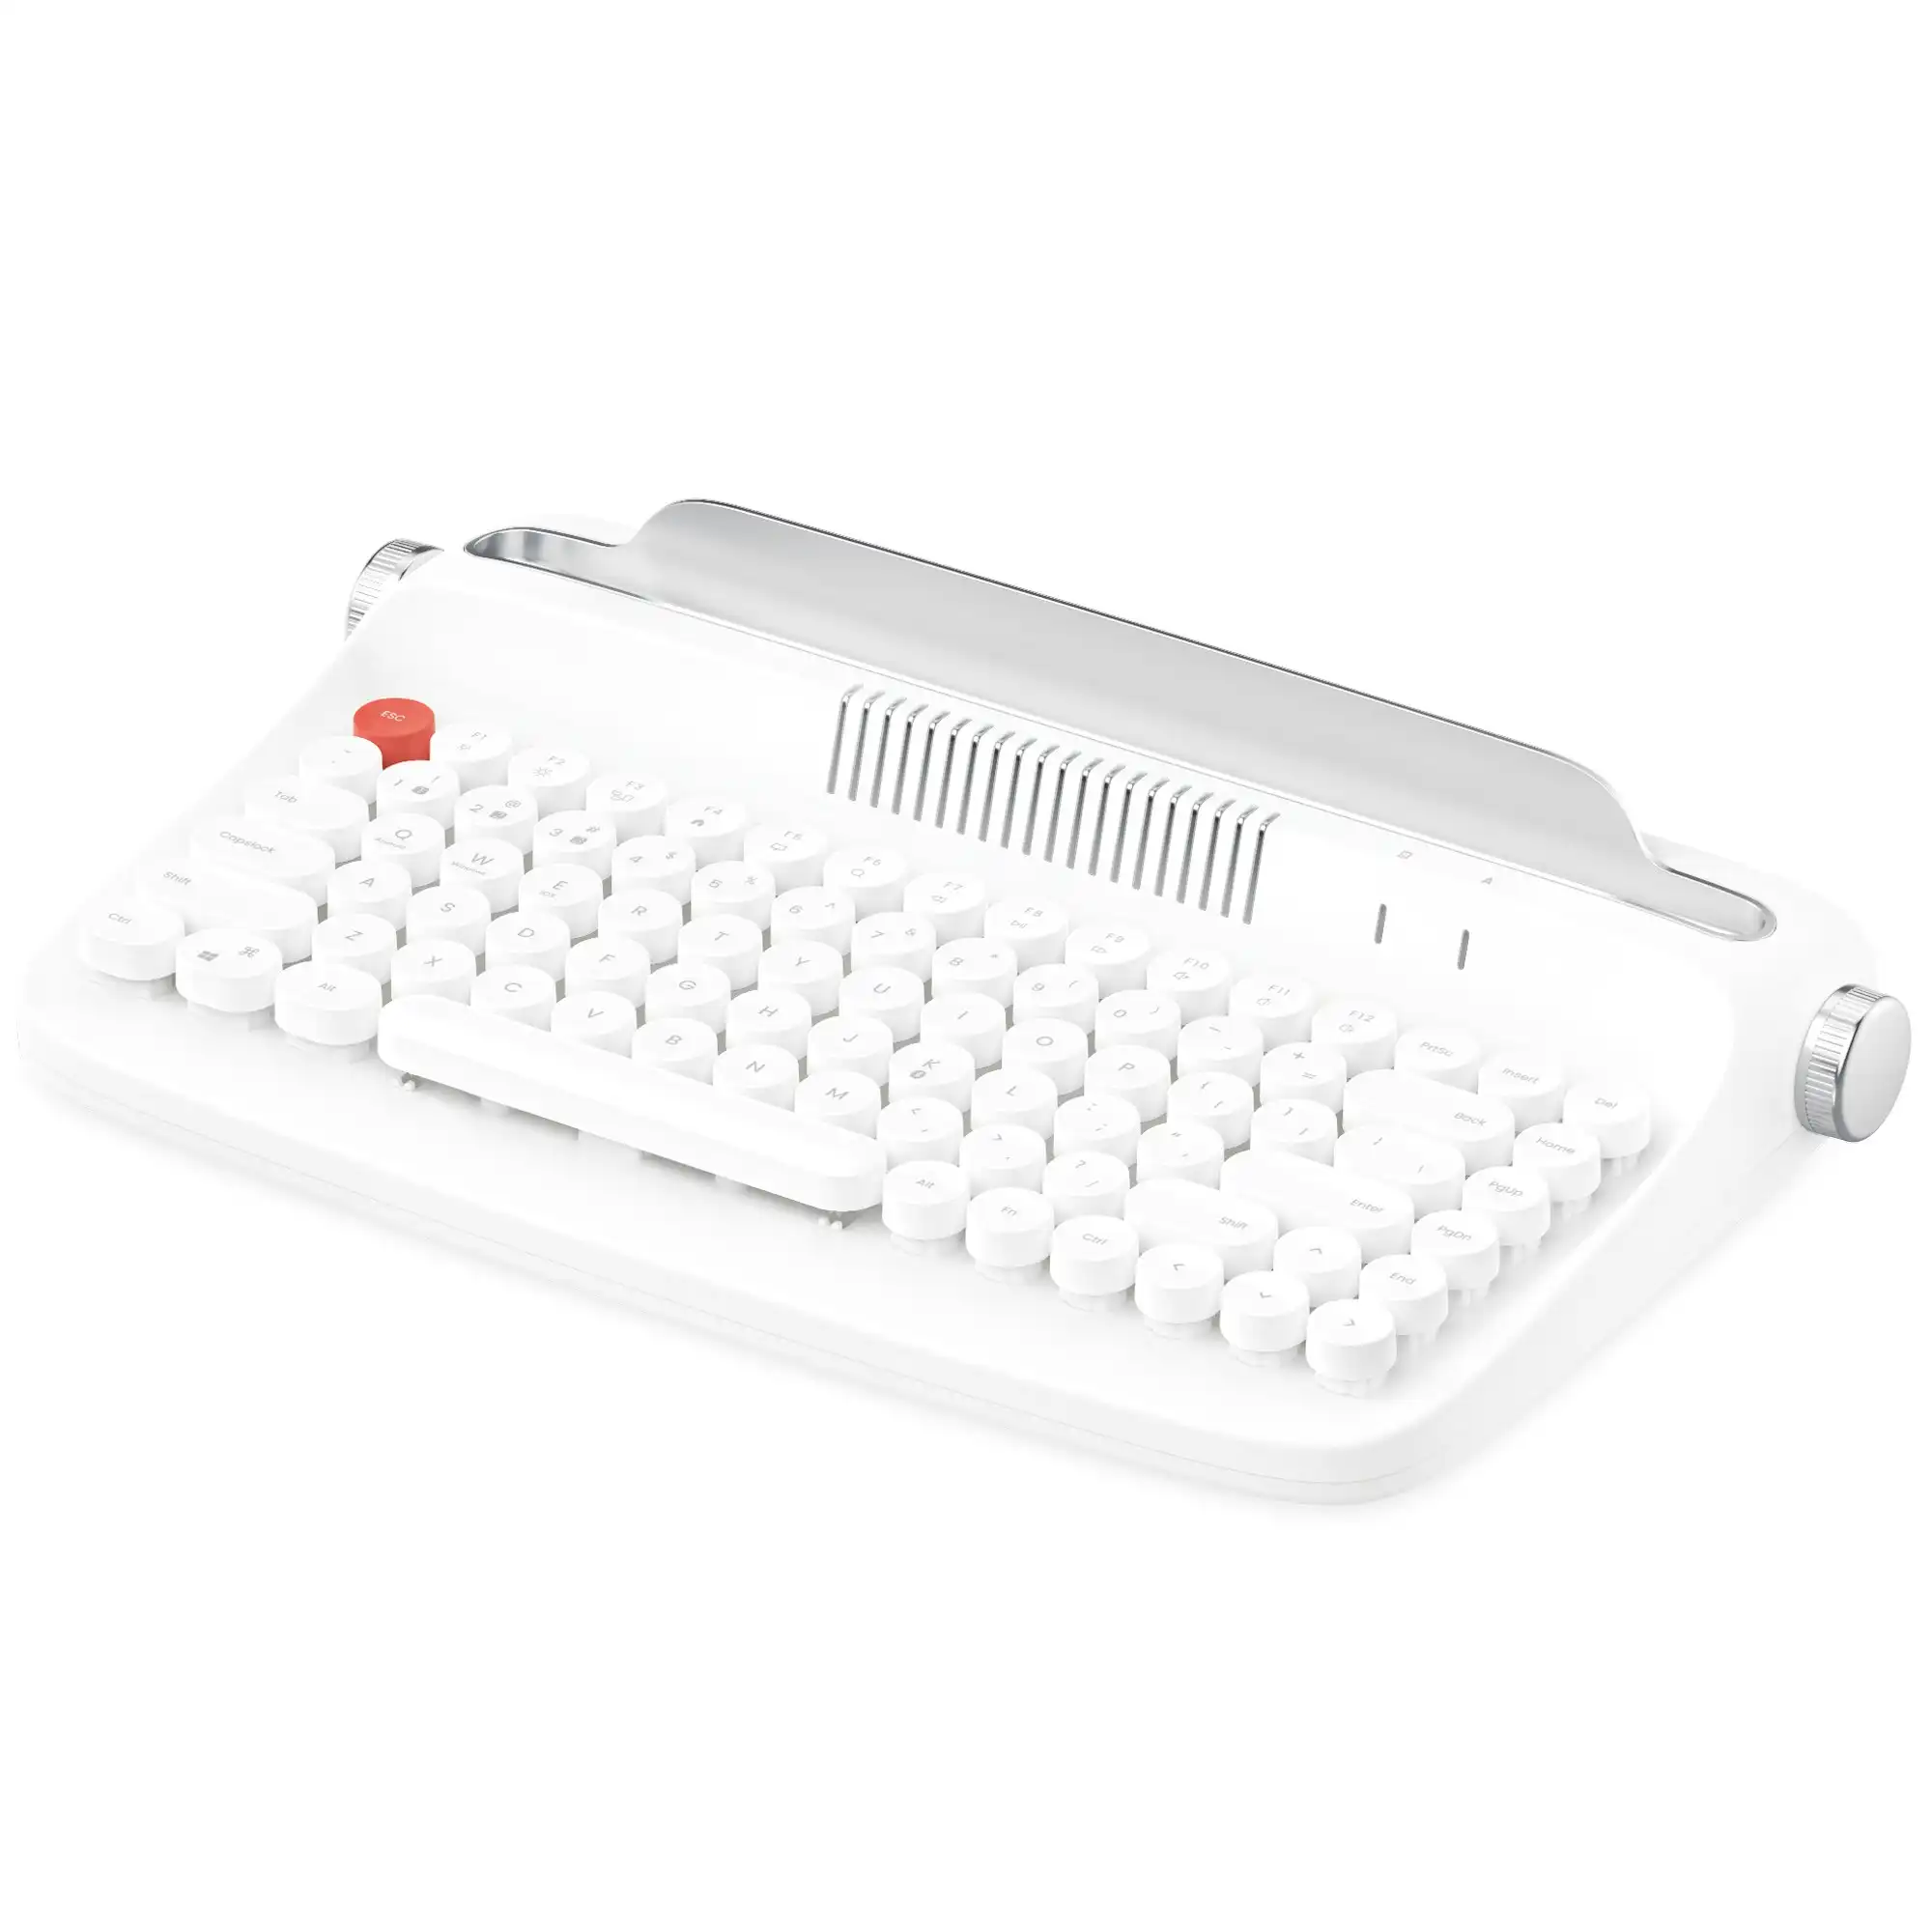 Todo Retro Typewriter Bluetooth Wireless Keyboard Tablet Holder 84 Key Mac Win Android BT 5.0 - White